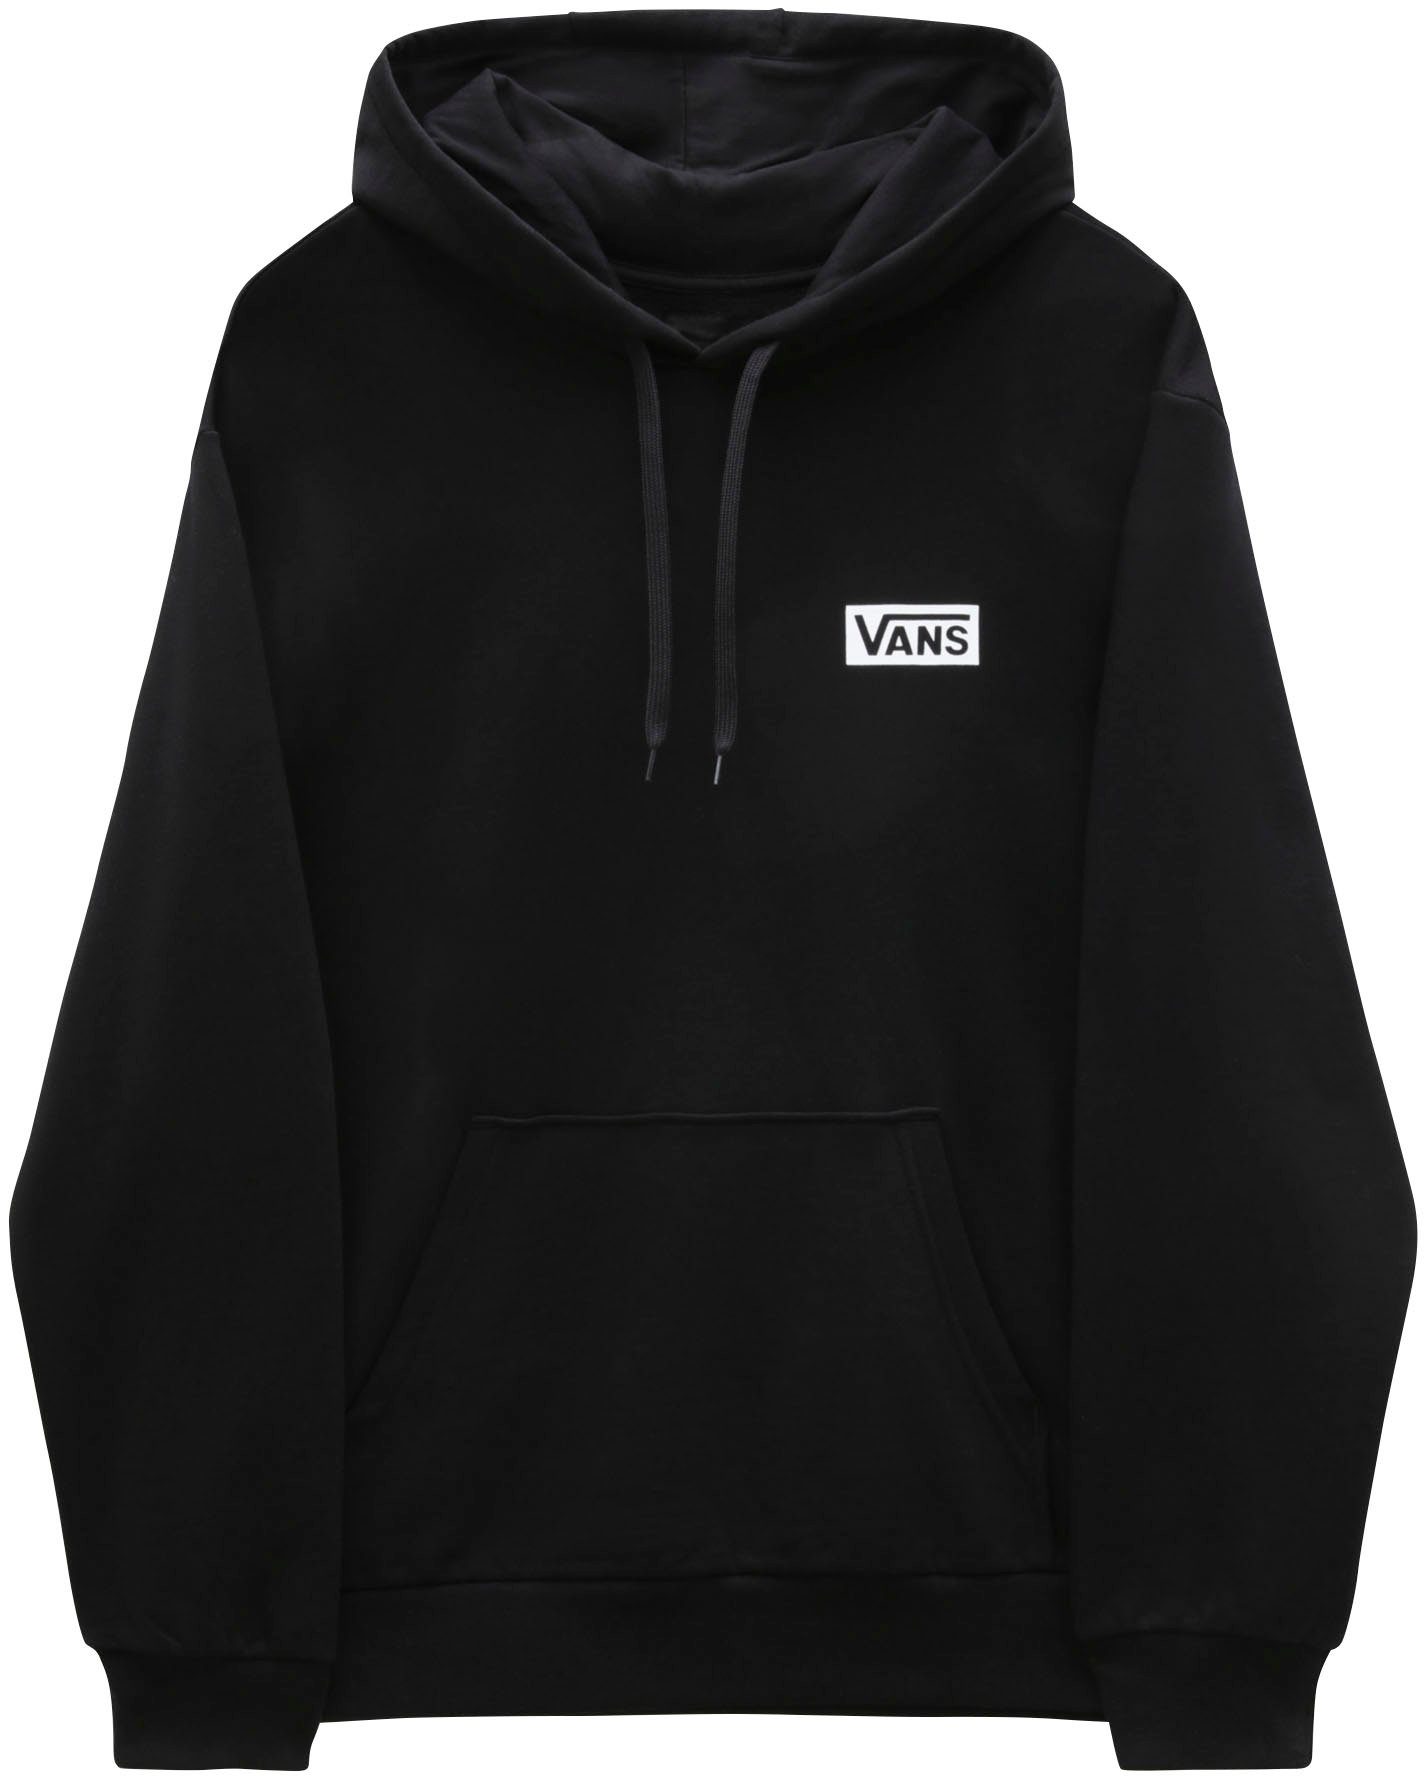 FIT RELAXED schwarz mit Logoschriftzug Vans Kapuzensweatshirt PO